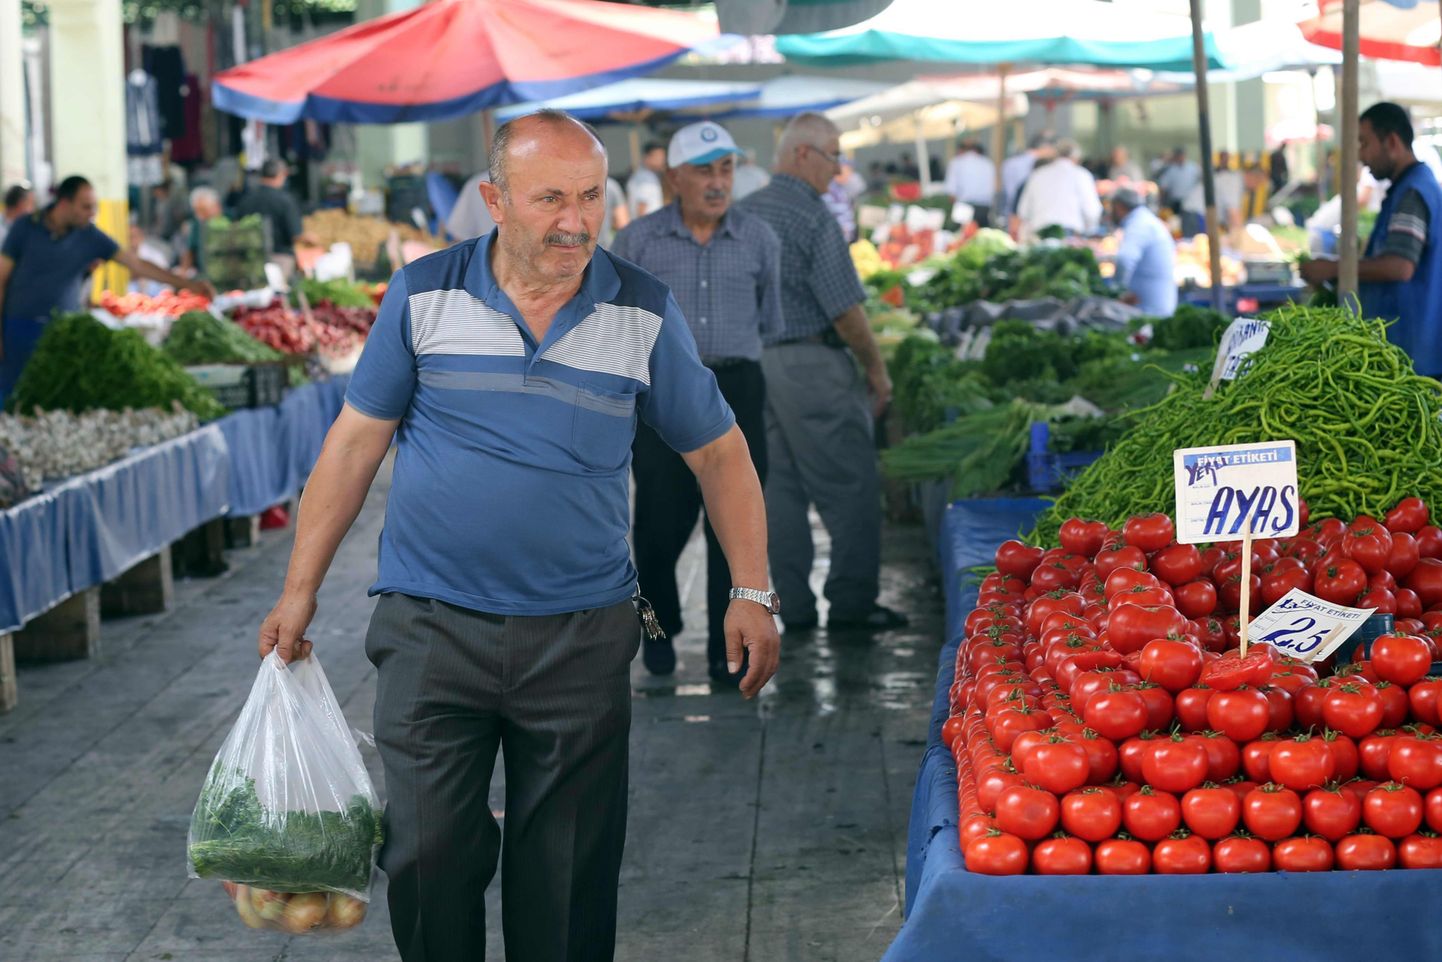 Ankaras tirgus